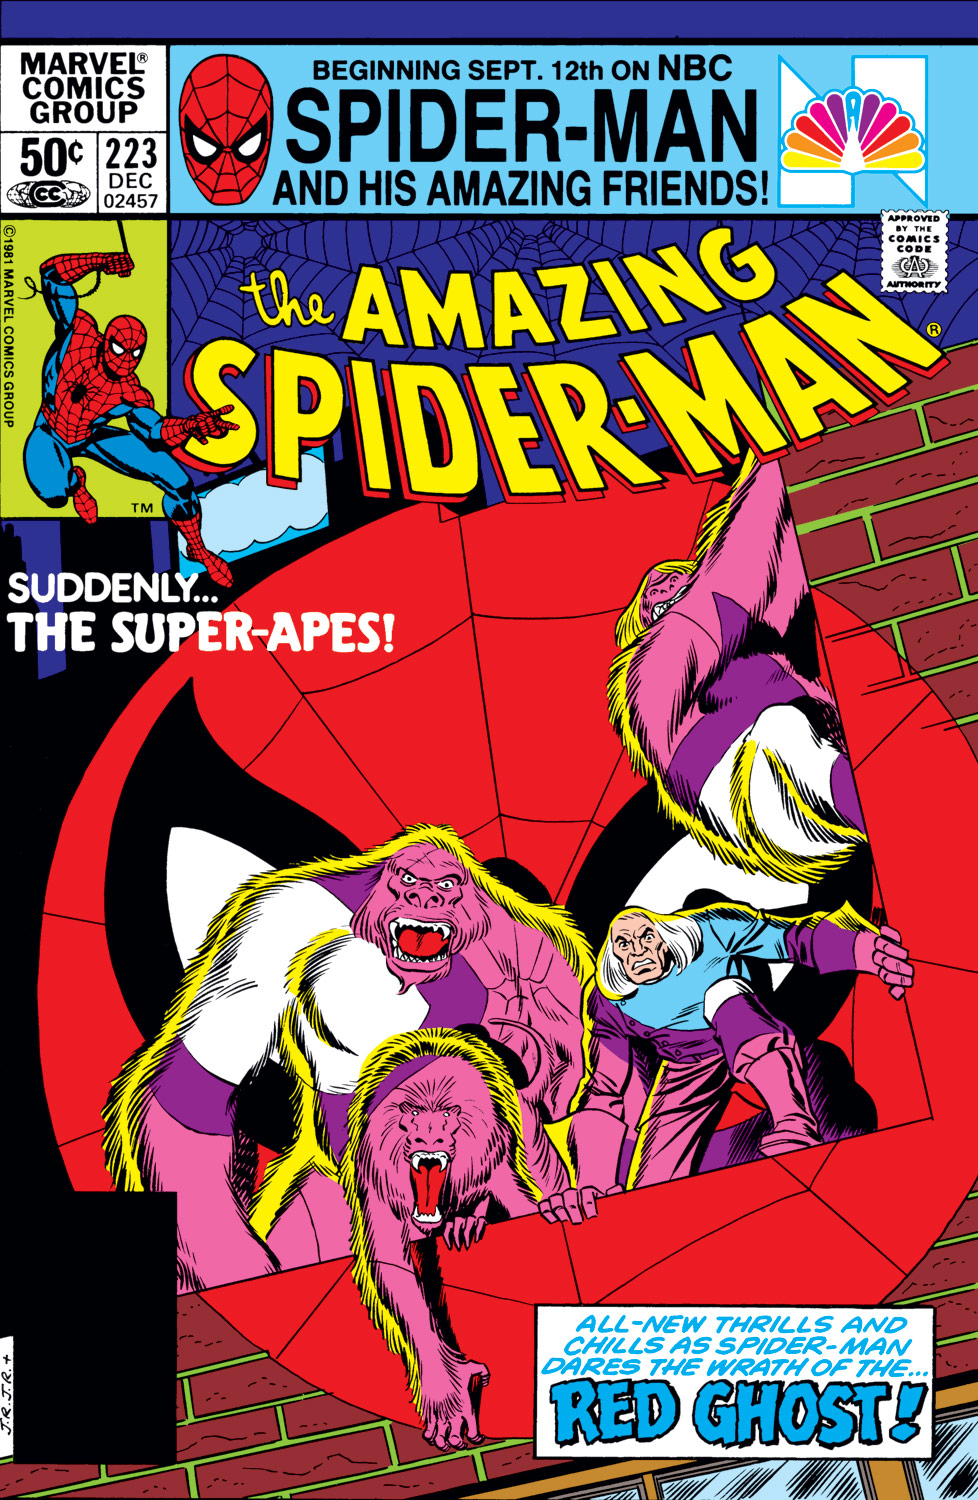 The Amazing Spider-Man (1963) #223